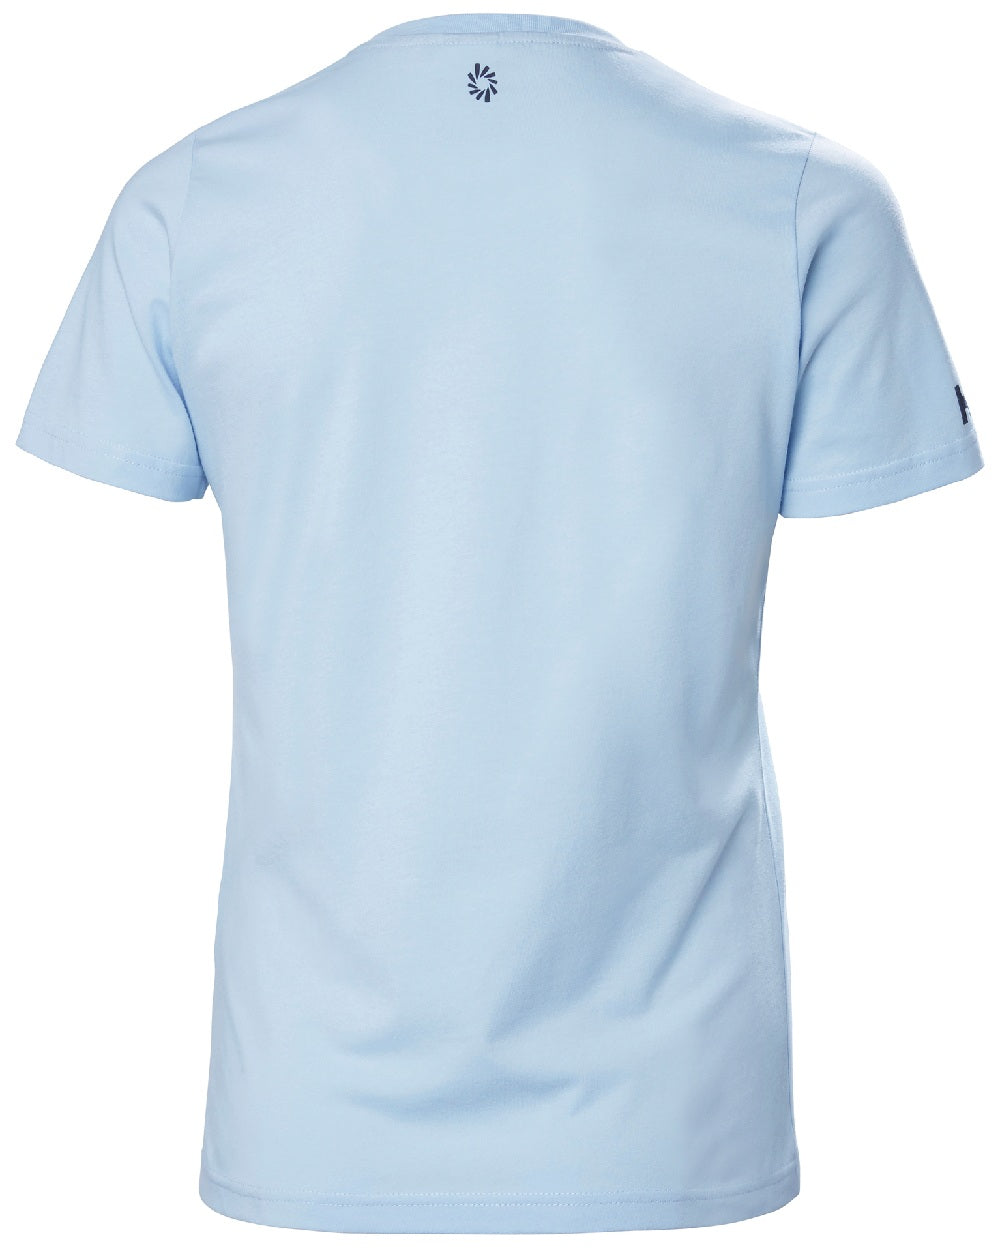 Pinnacle Blue coloured Helly Hansen Womens Ocean Race T-Shirt on white background 